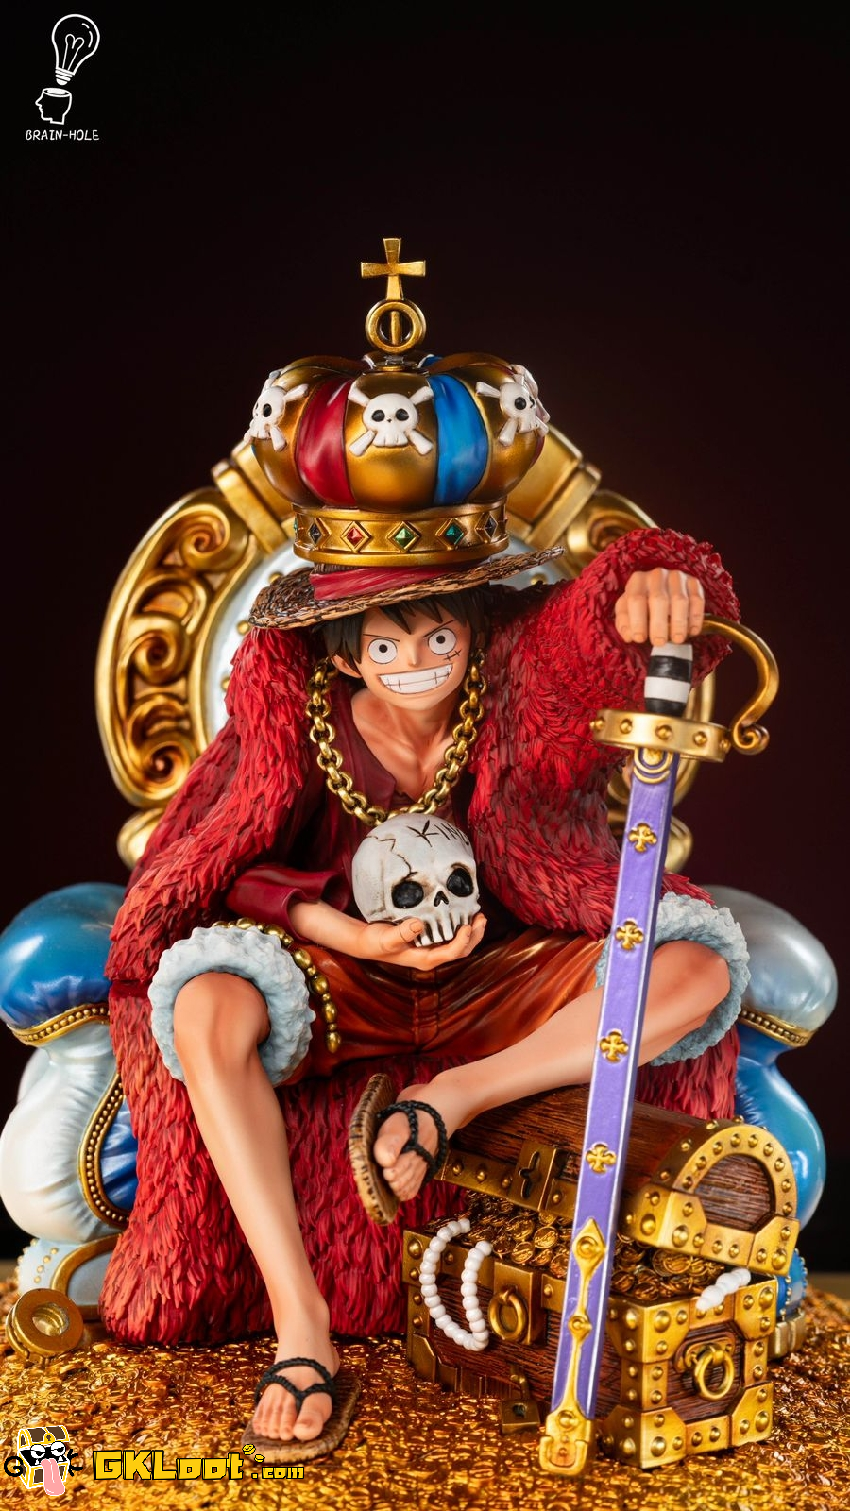 [Pre-Order] Brain Hole Studio One Piece Monkey D. Luffy Statue